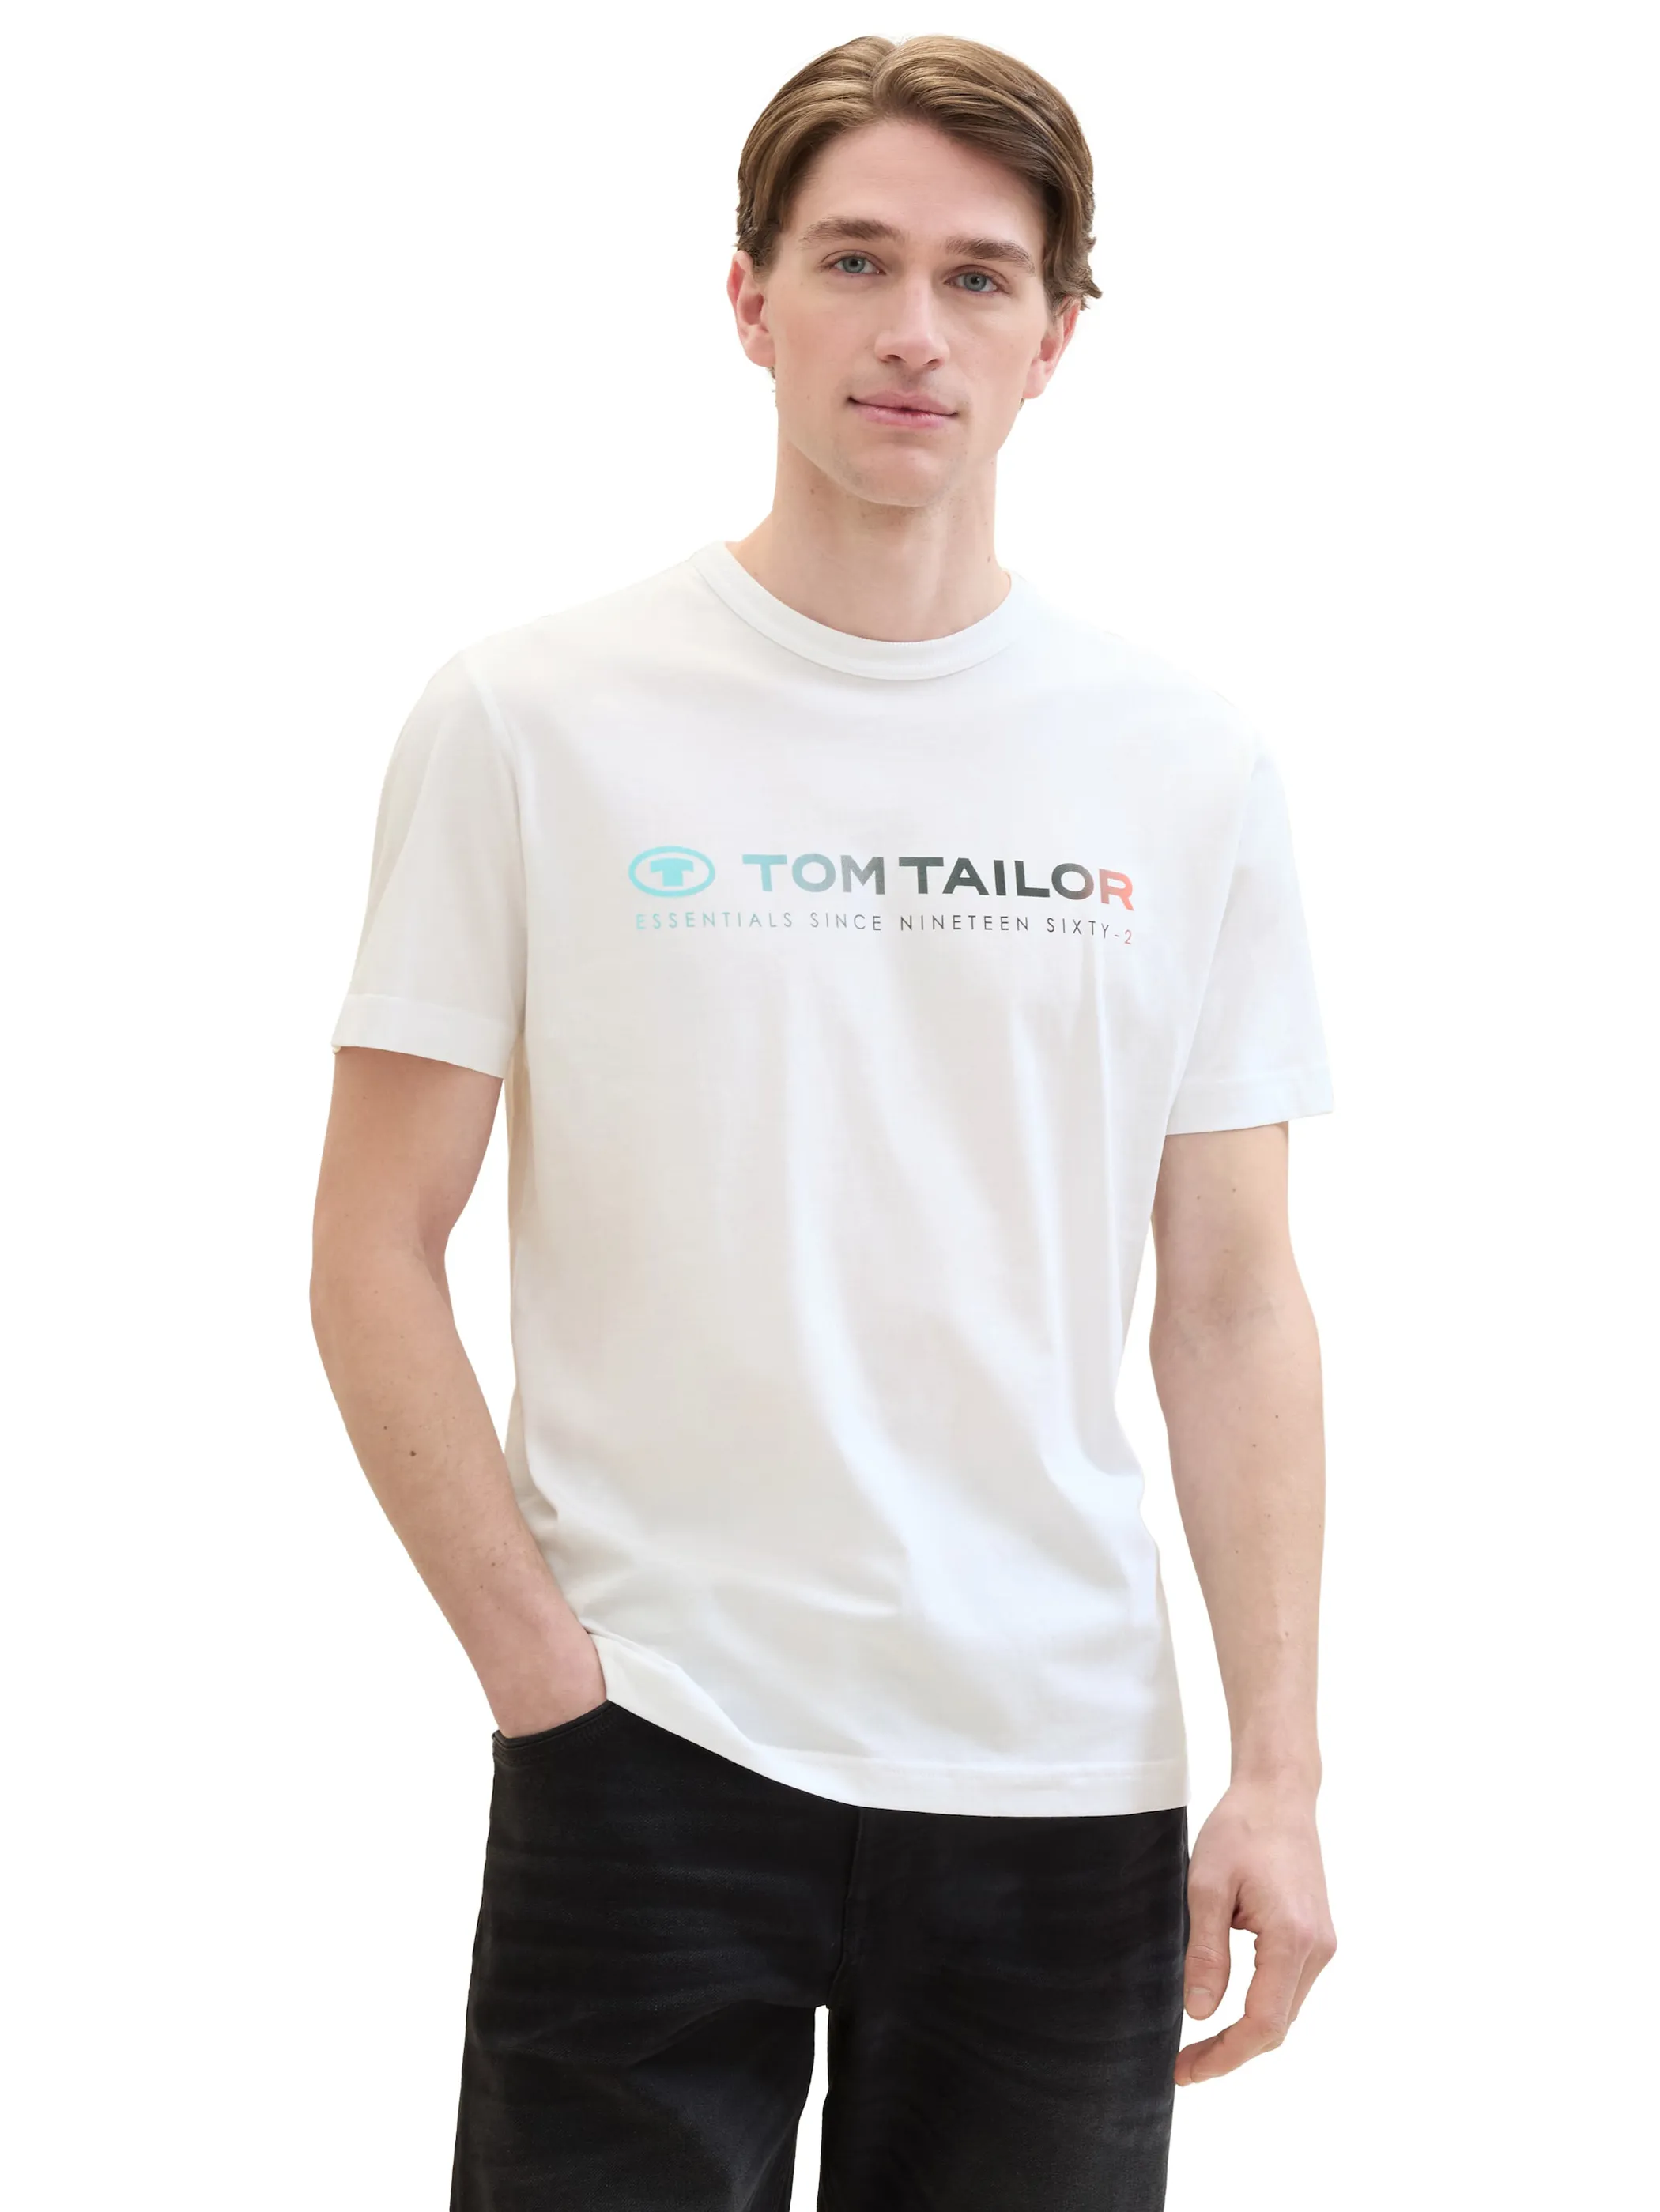 Tom Tailor 1041855 printed t-shirt Weiß 895629 20000 3